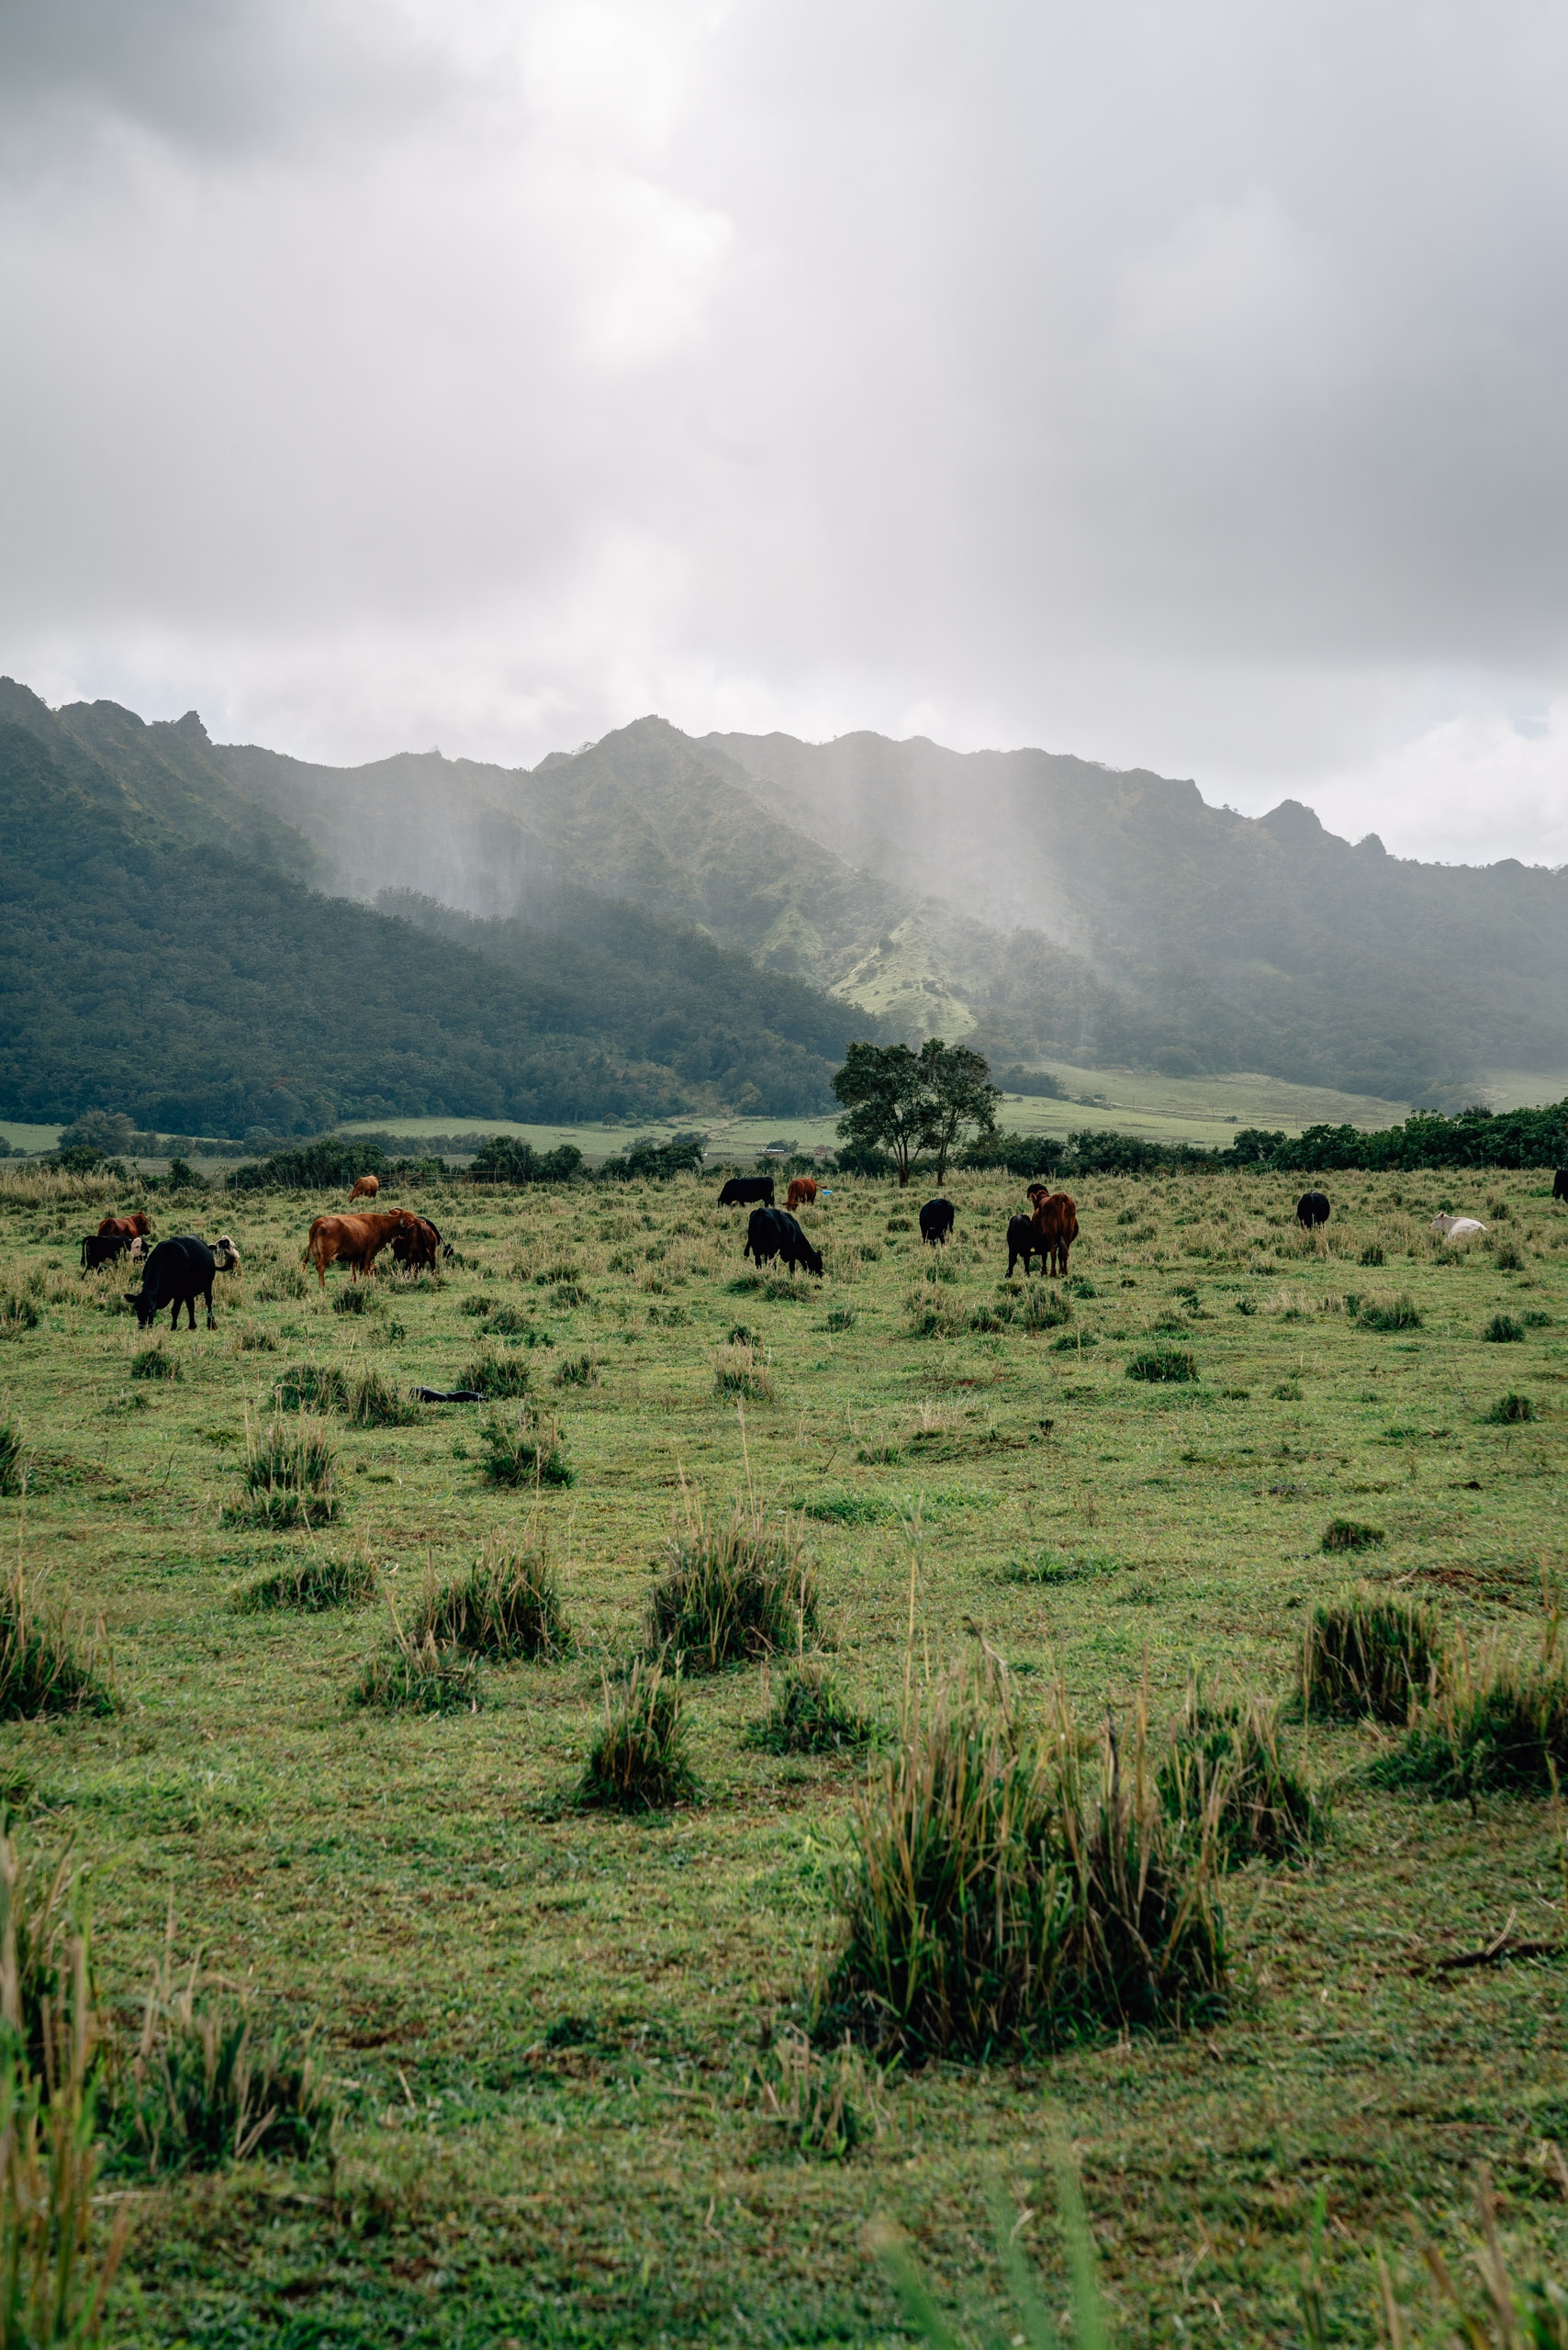 The Grassy Pastures of Kauai - Tall